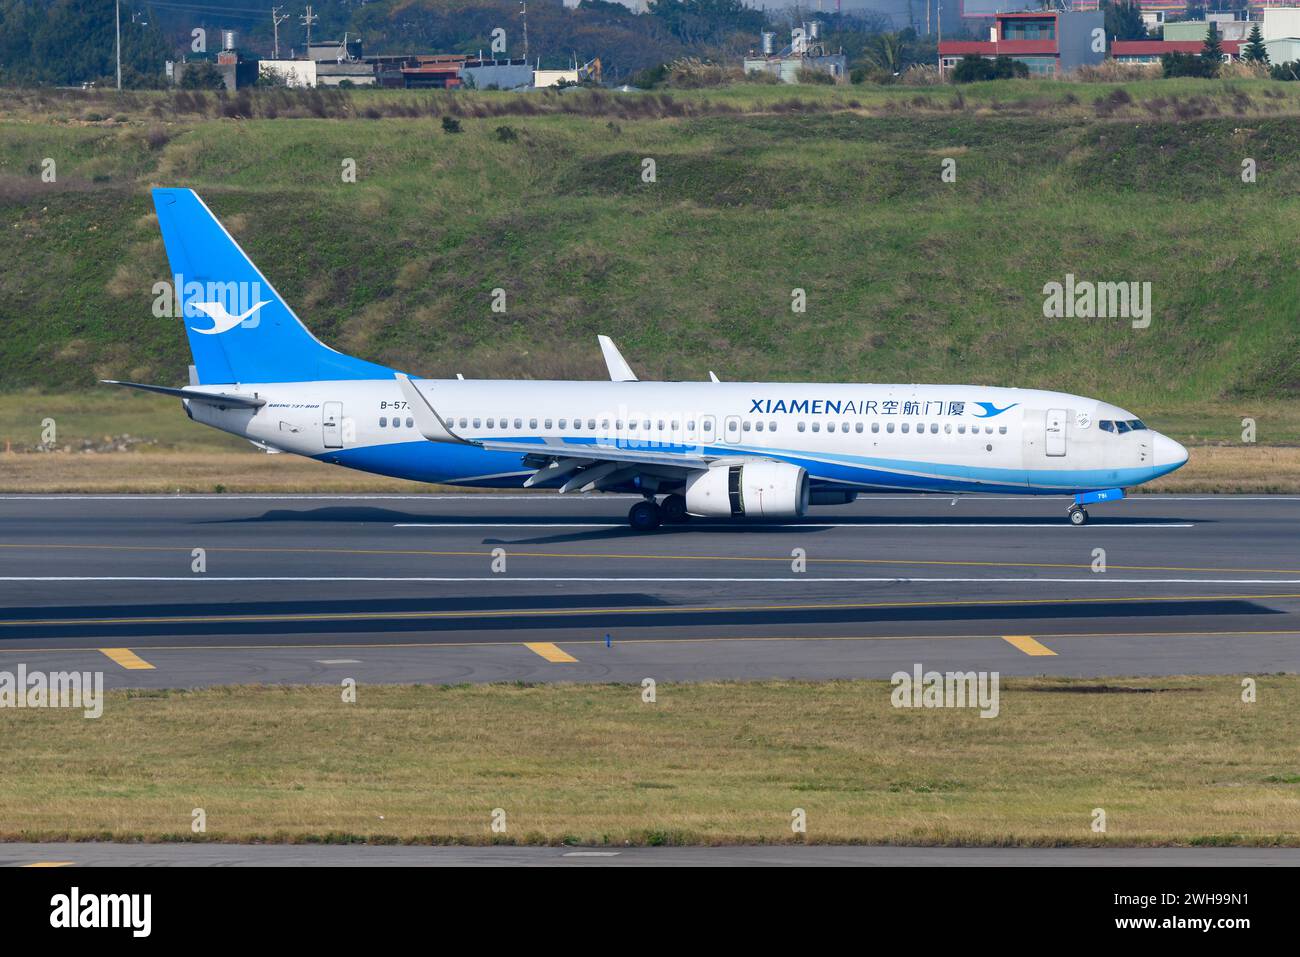 Xiamen Airlines Boeing 737 aircraft landing. Airplane Boeing 737-800 of XiamenAir, also know as Xiamen Air. Stock Photo